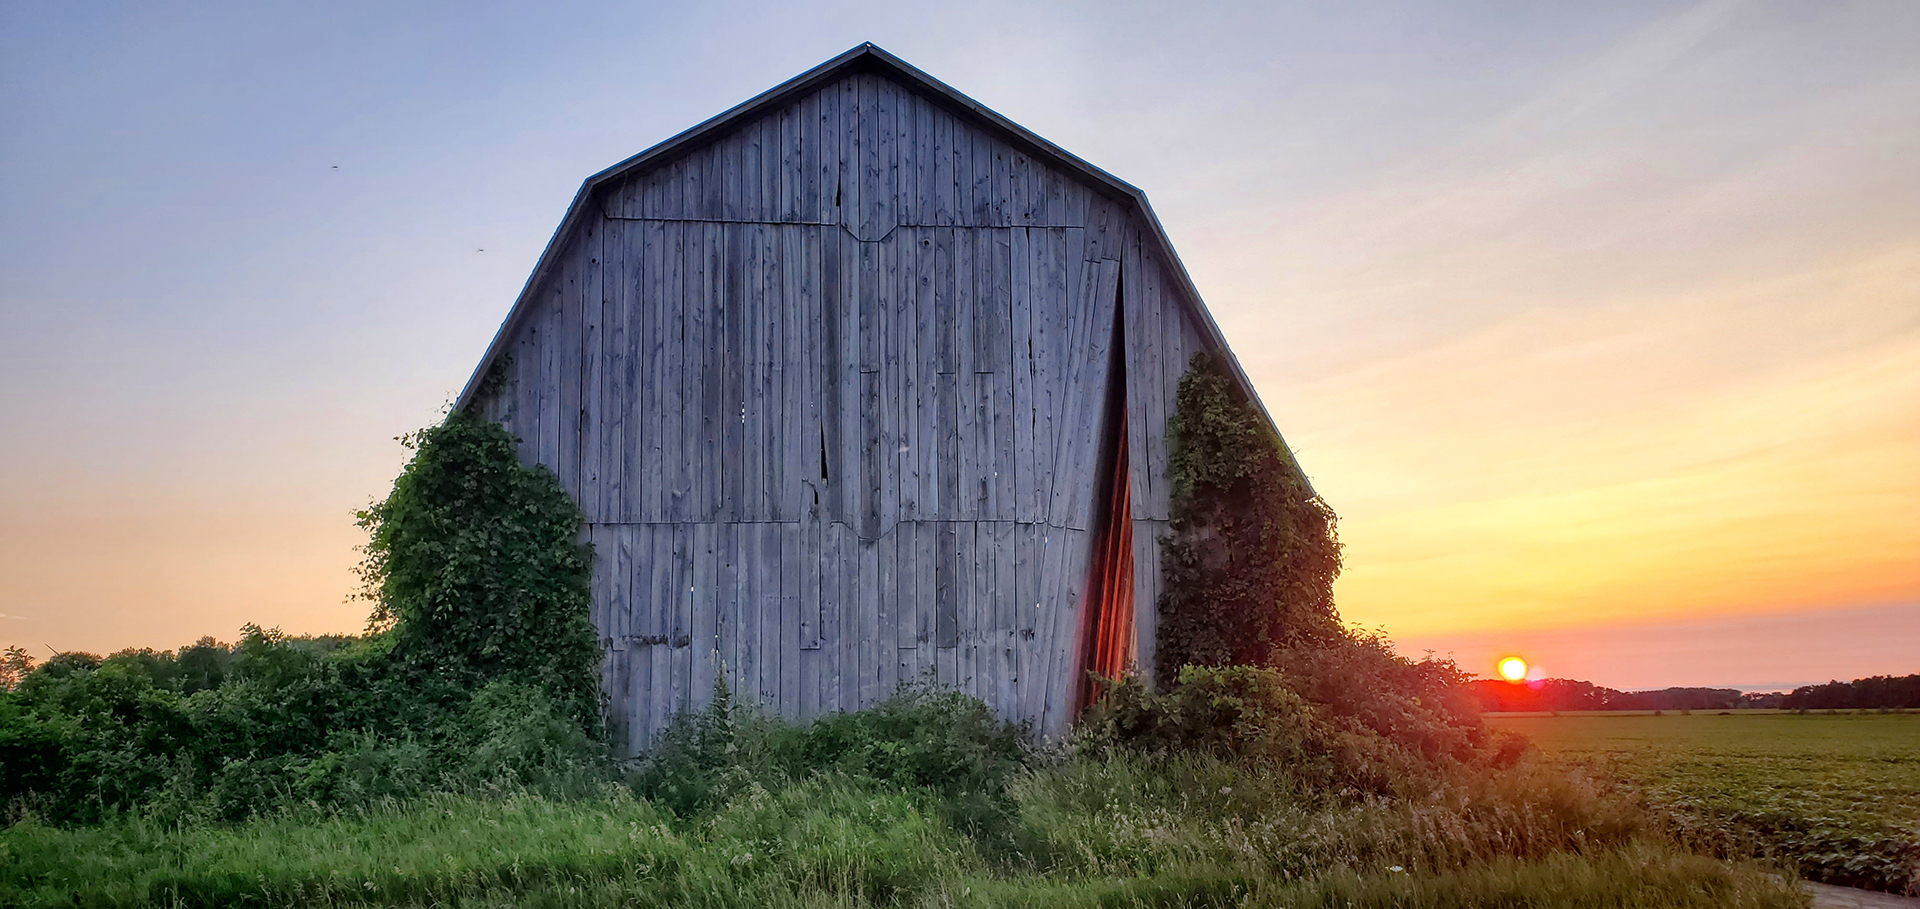 Secret sky : saving the barn